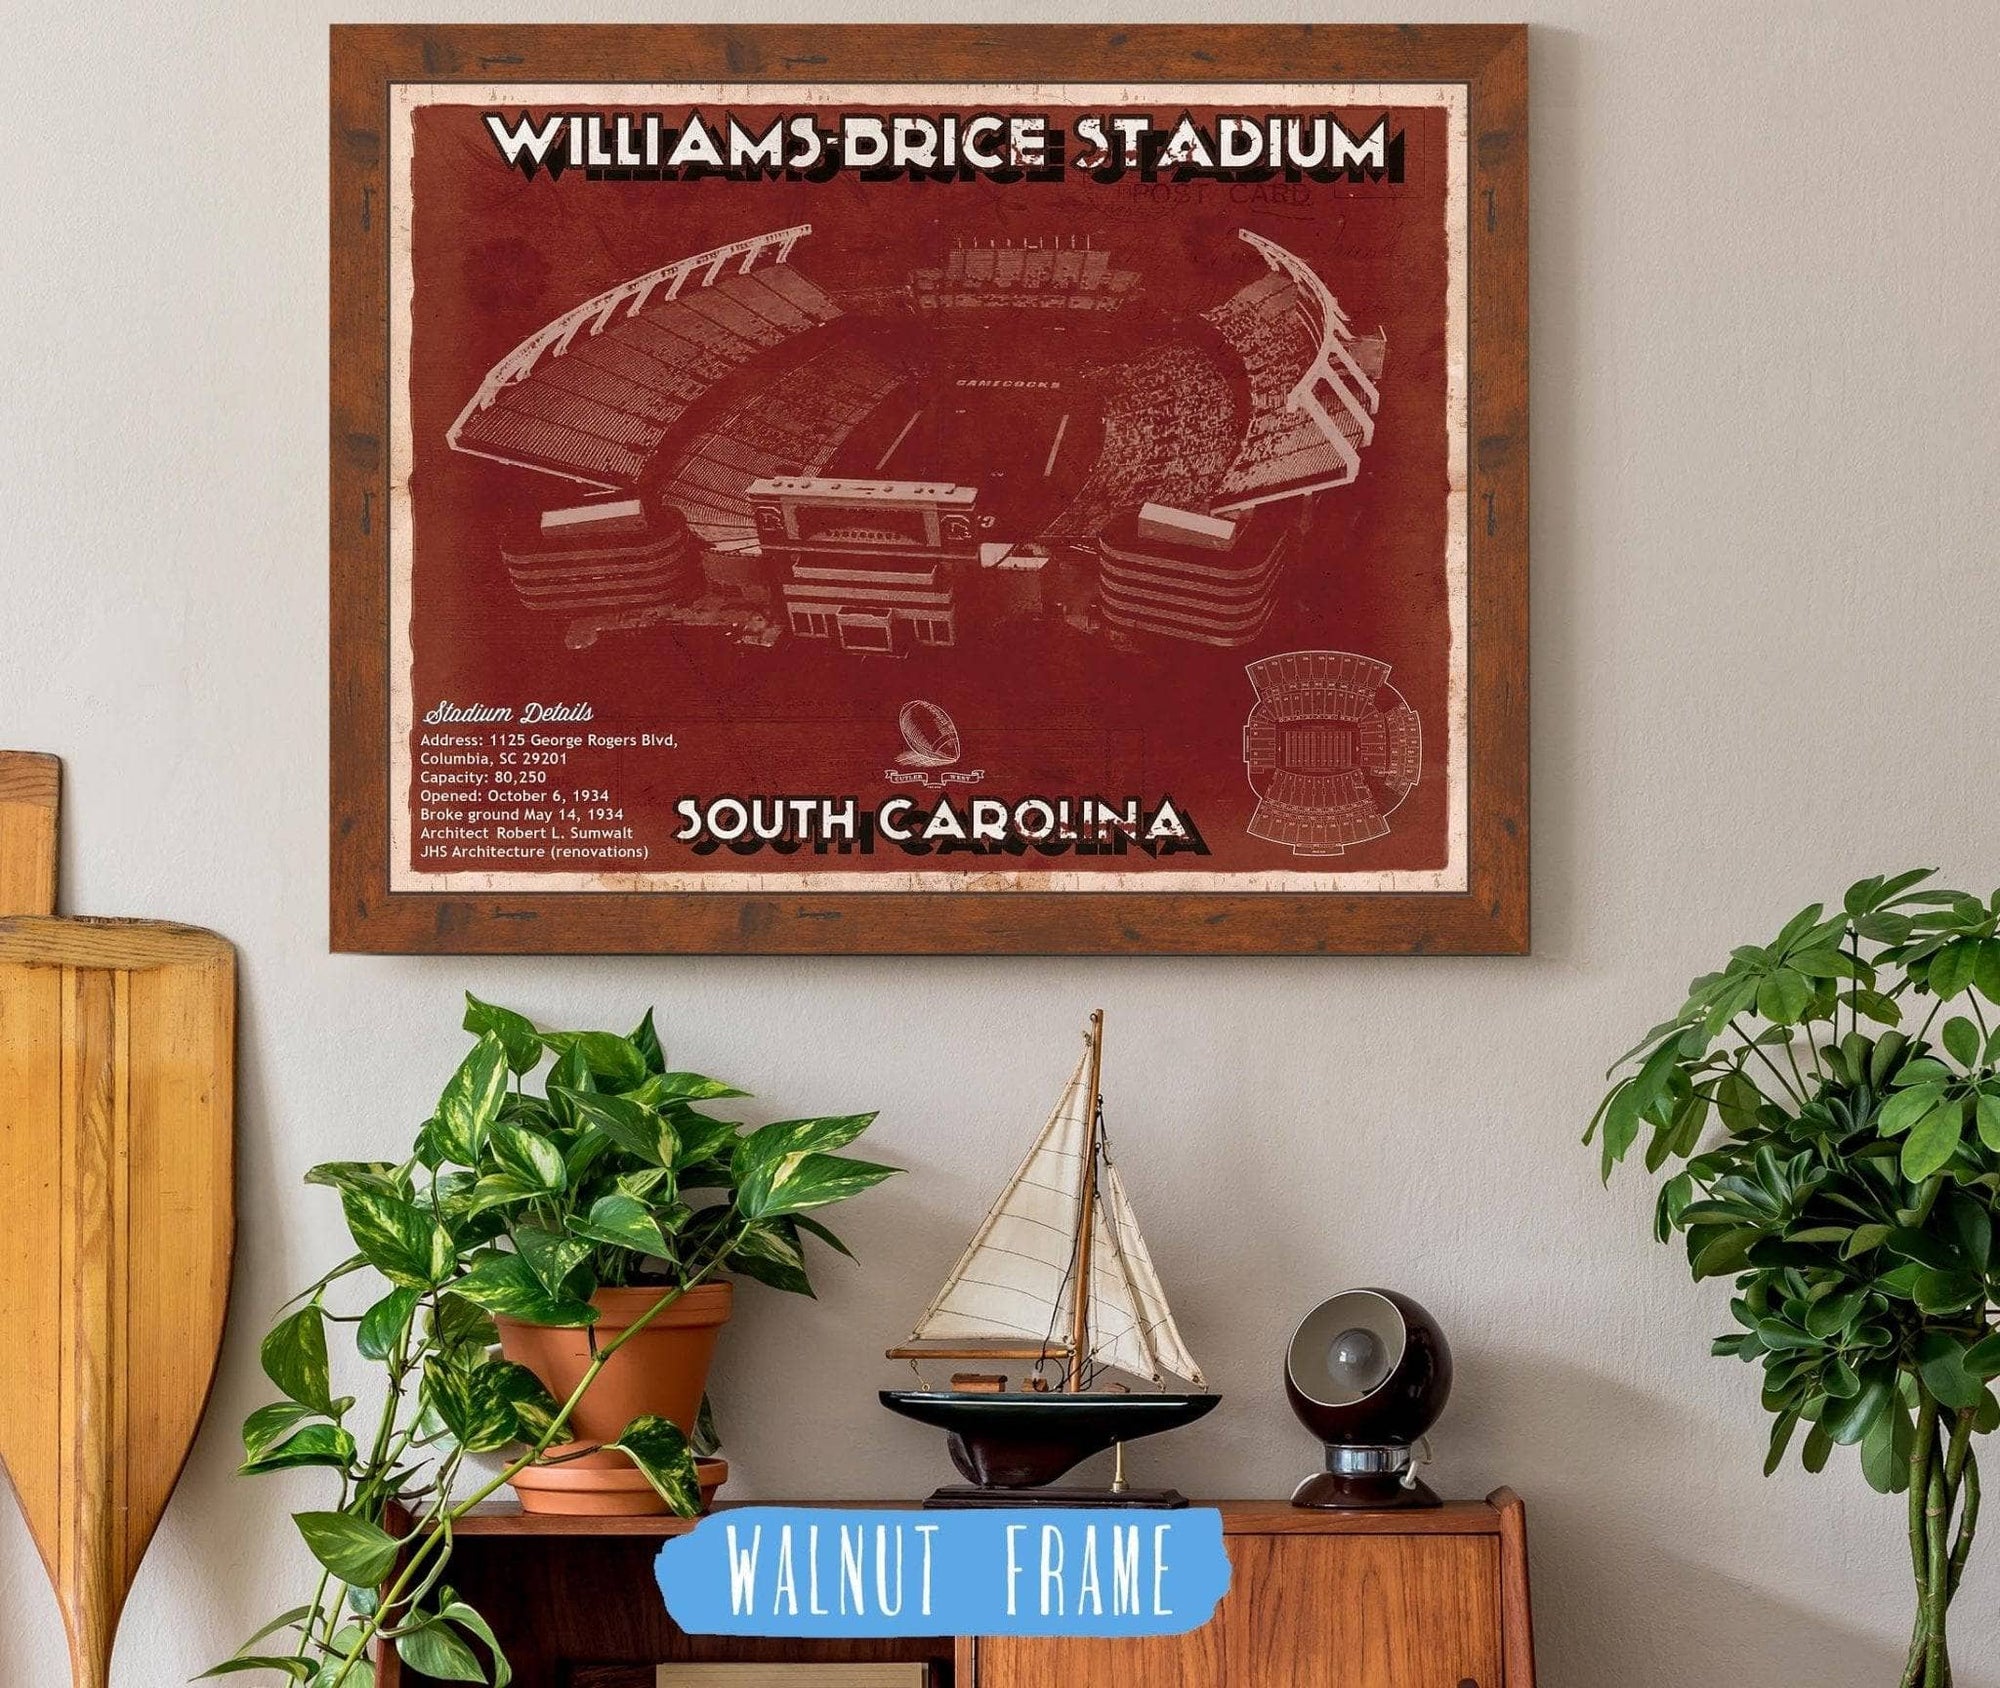 Cutler West 14" x 11" / Walnut Frame Williams-Brice Stadium Art - South Carolina Gamecocks Vintage Blueprint Art Chart 649671257-14"-x-11"24997